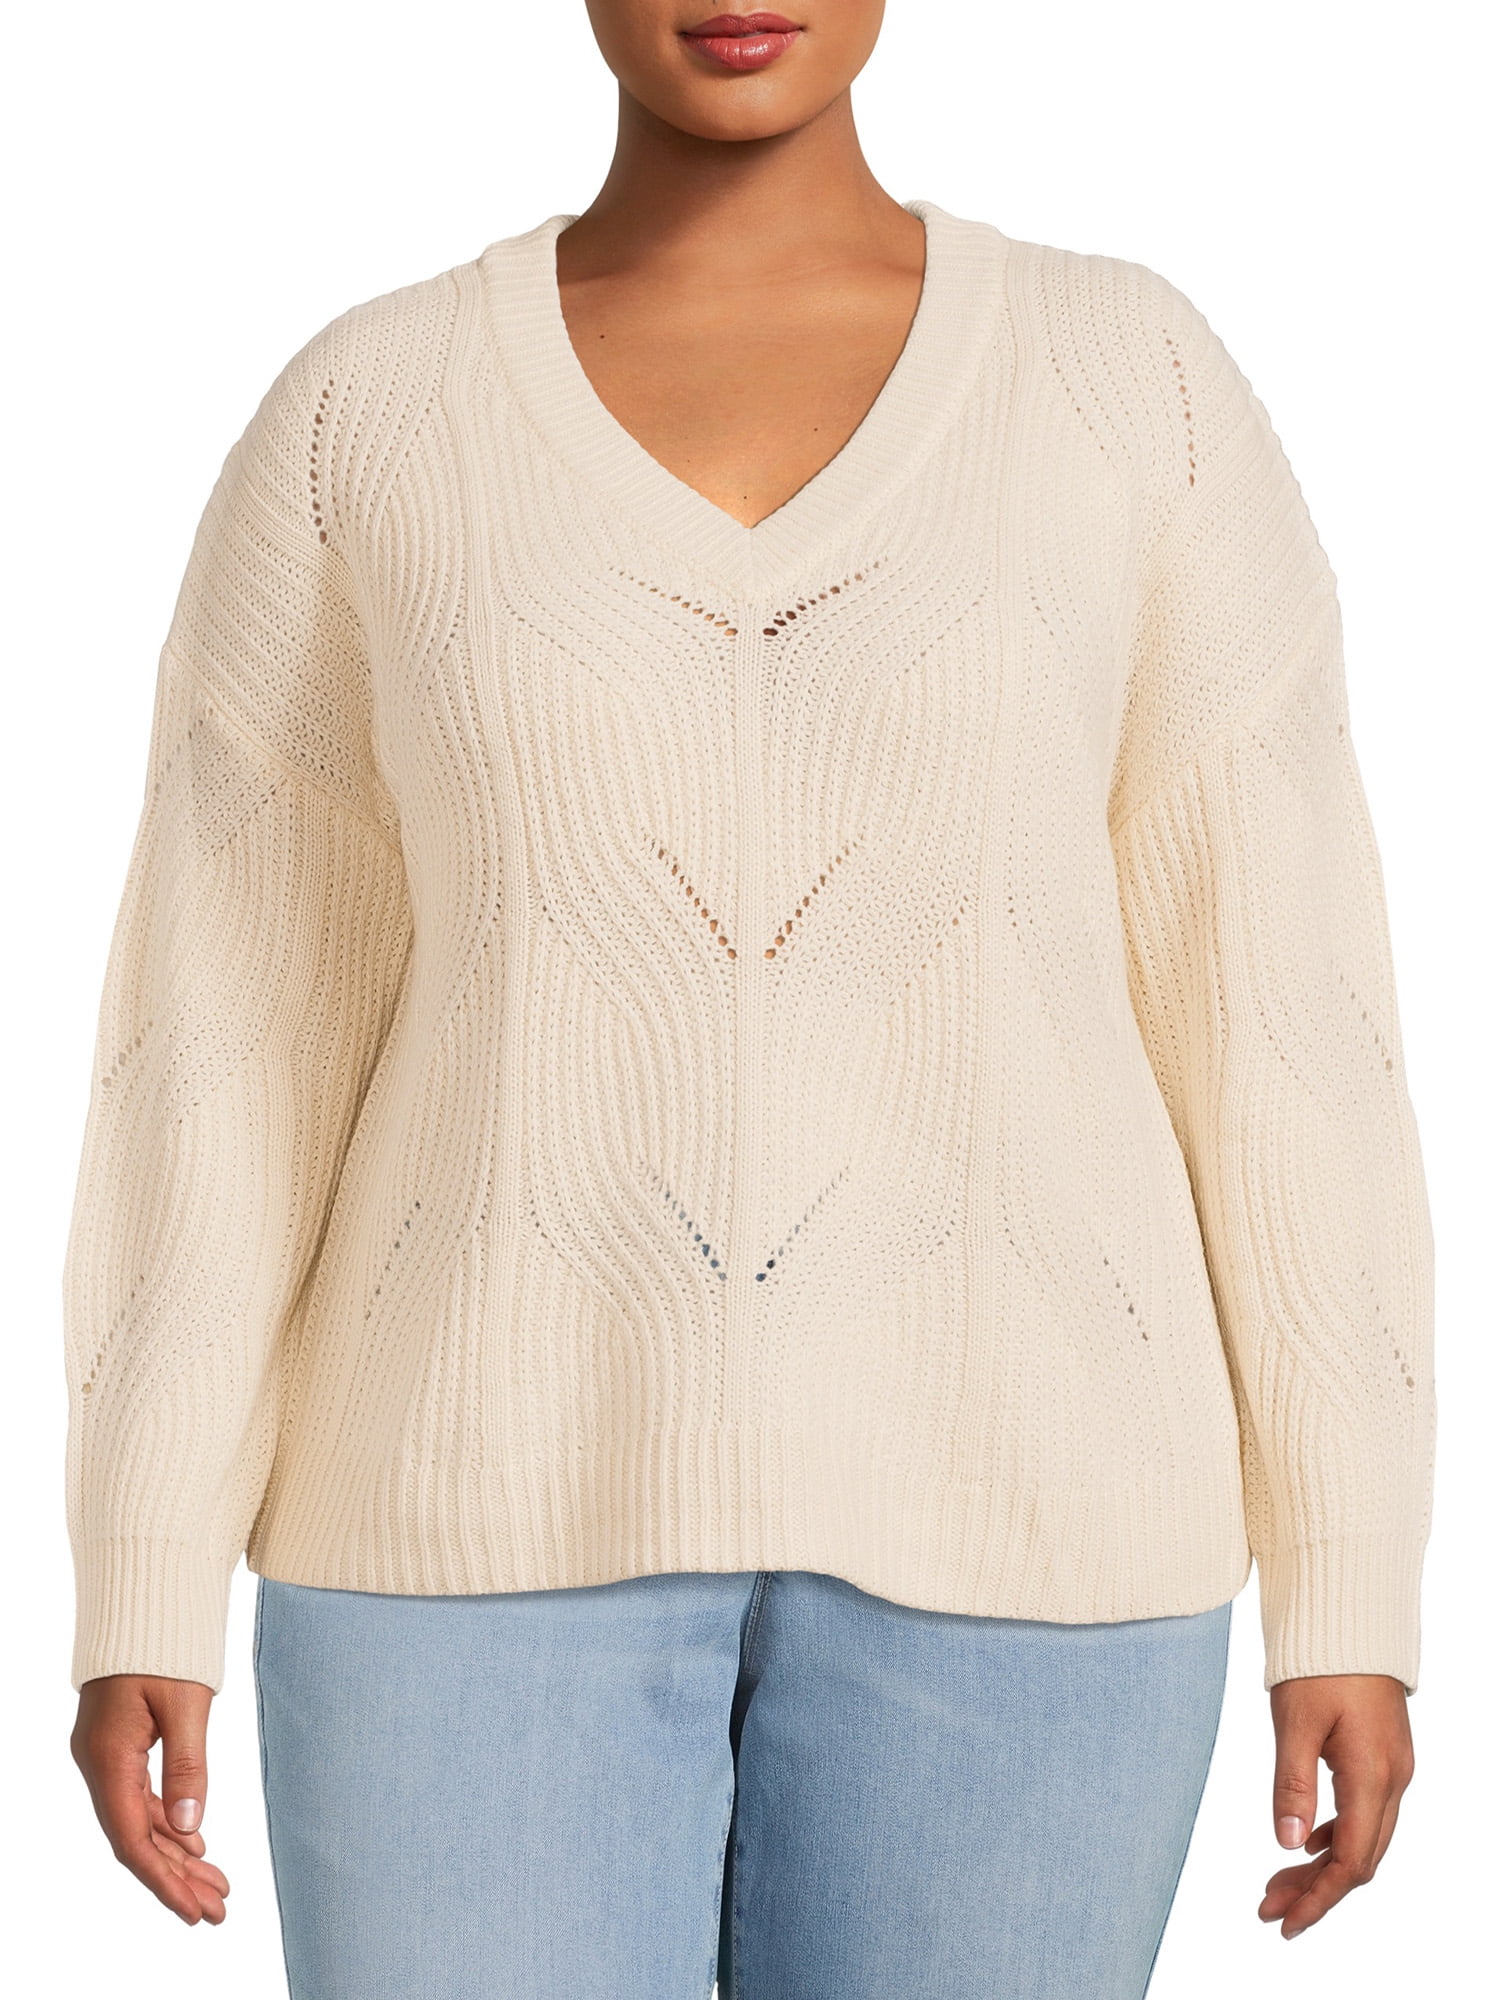 Terra & Sky Women's Plus Size V-Neck Sweater - Walmart.com